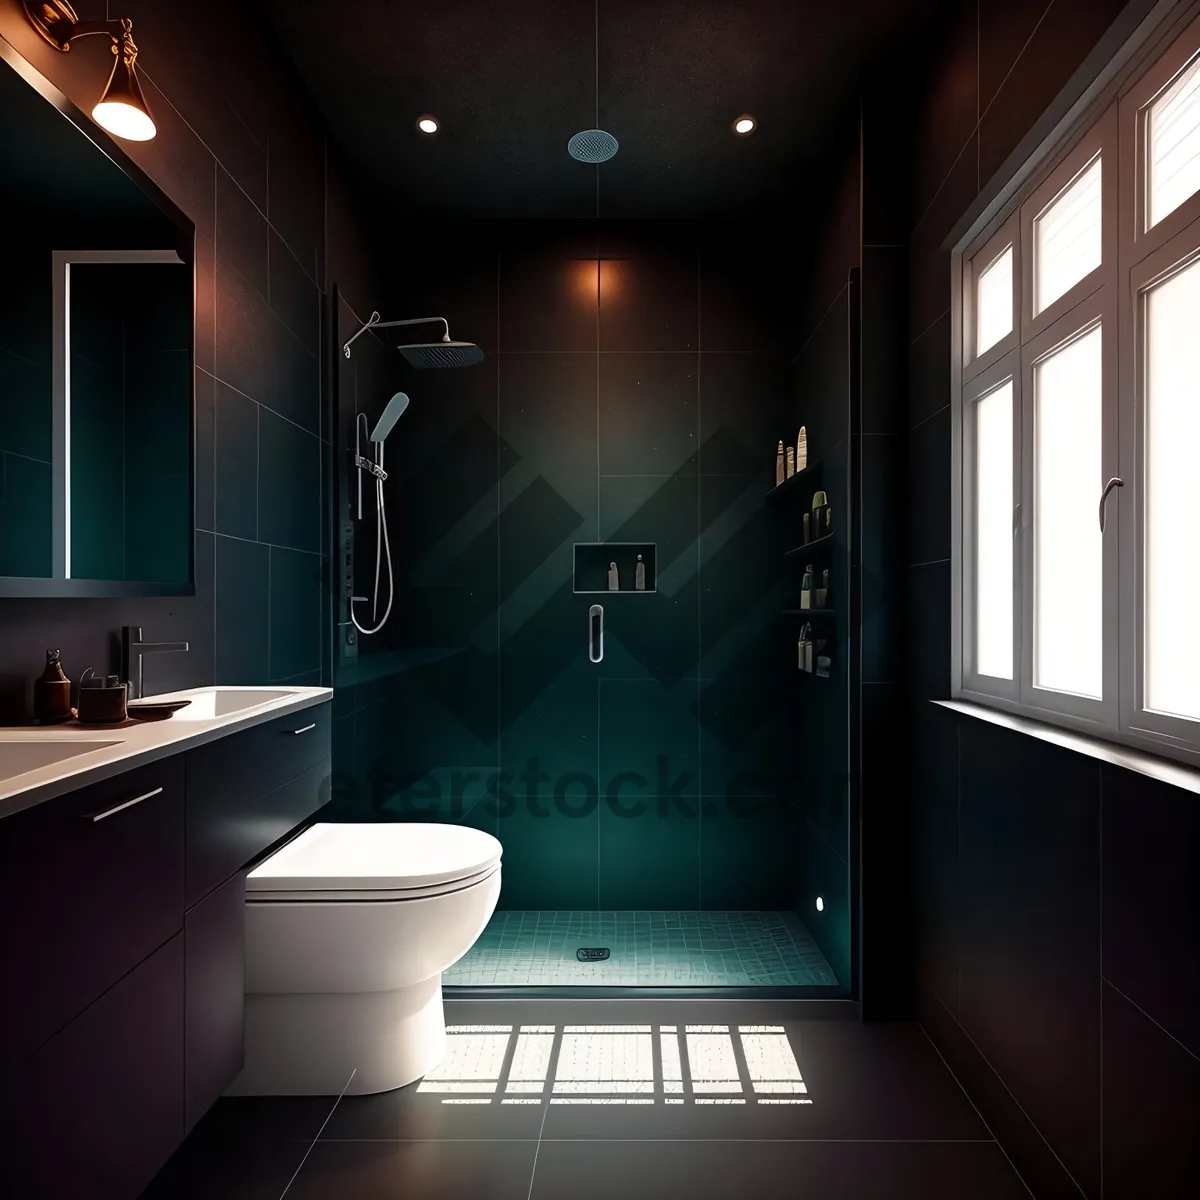 Picture of Luxury hotel bathroom with modern bathtub and elegant decor.